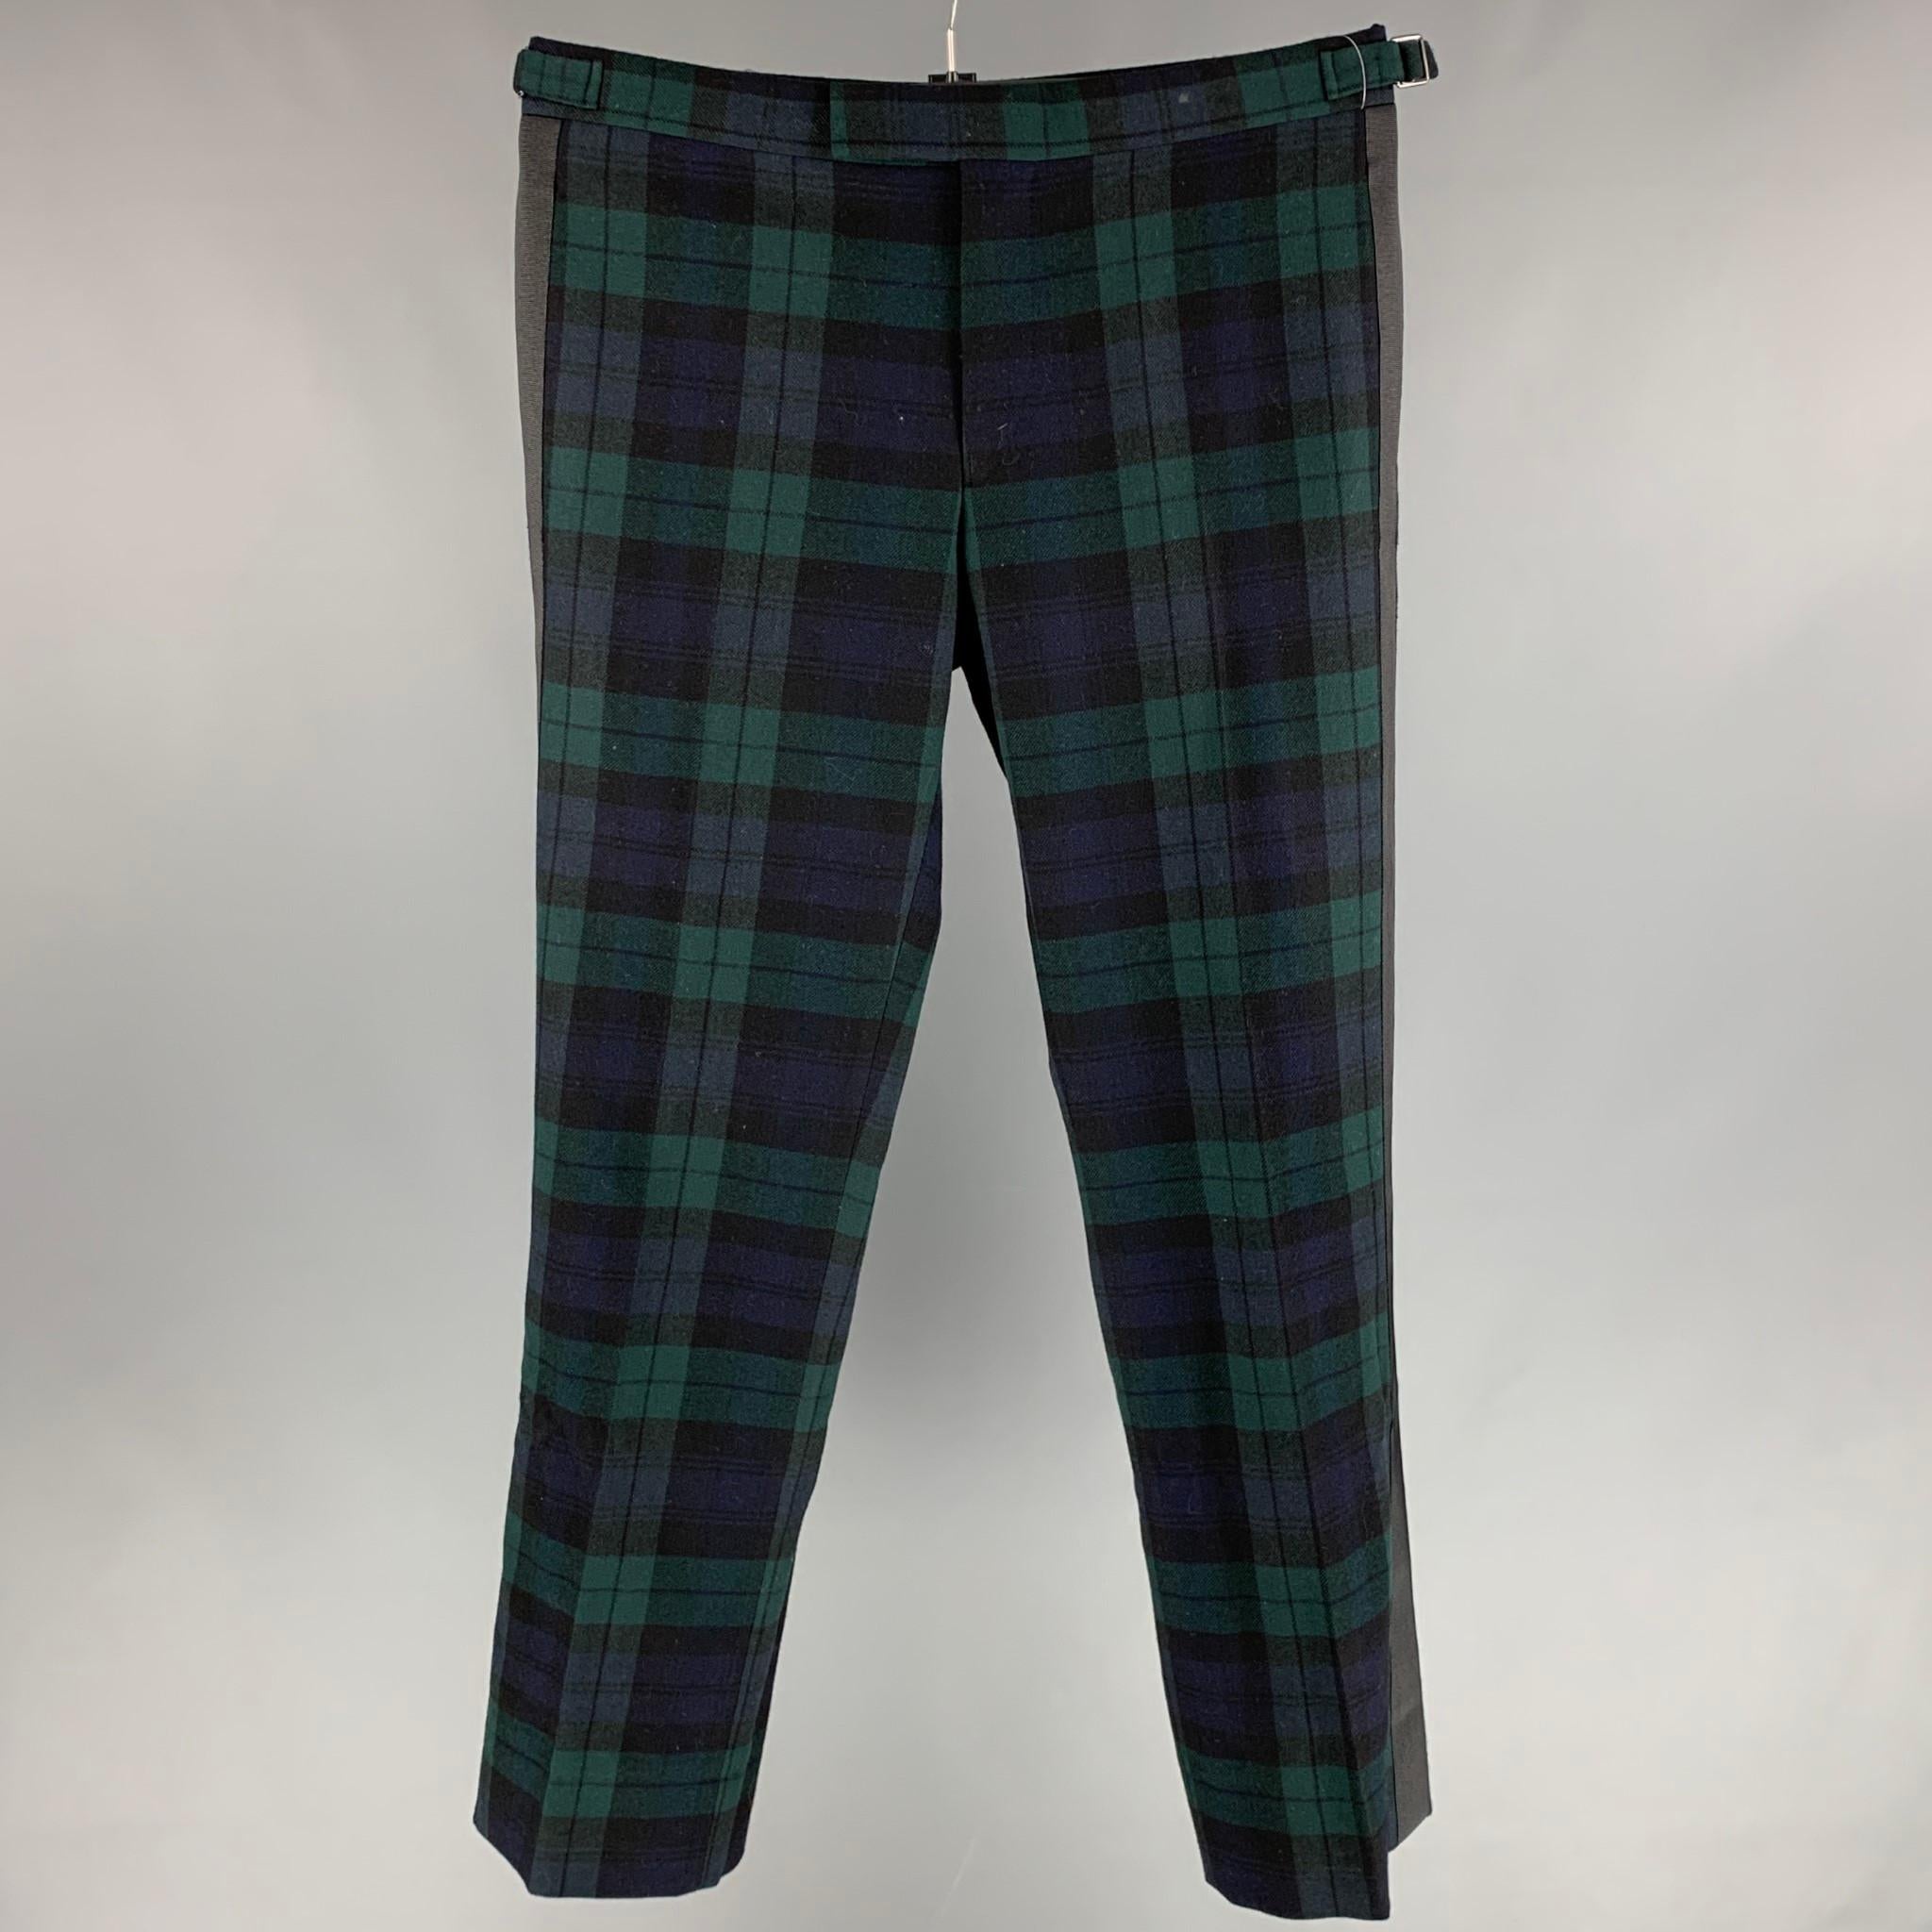 RALPH LAUREN Collection Size 34 Black & Green Navy Blackwatch Plaid Pants